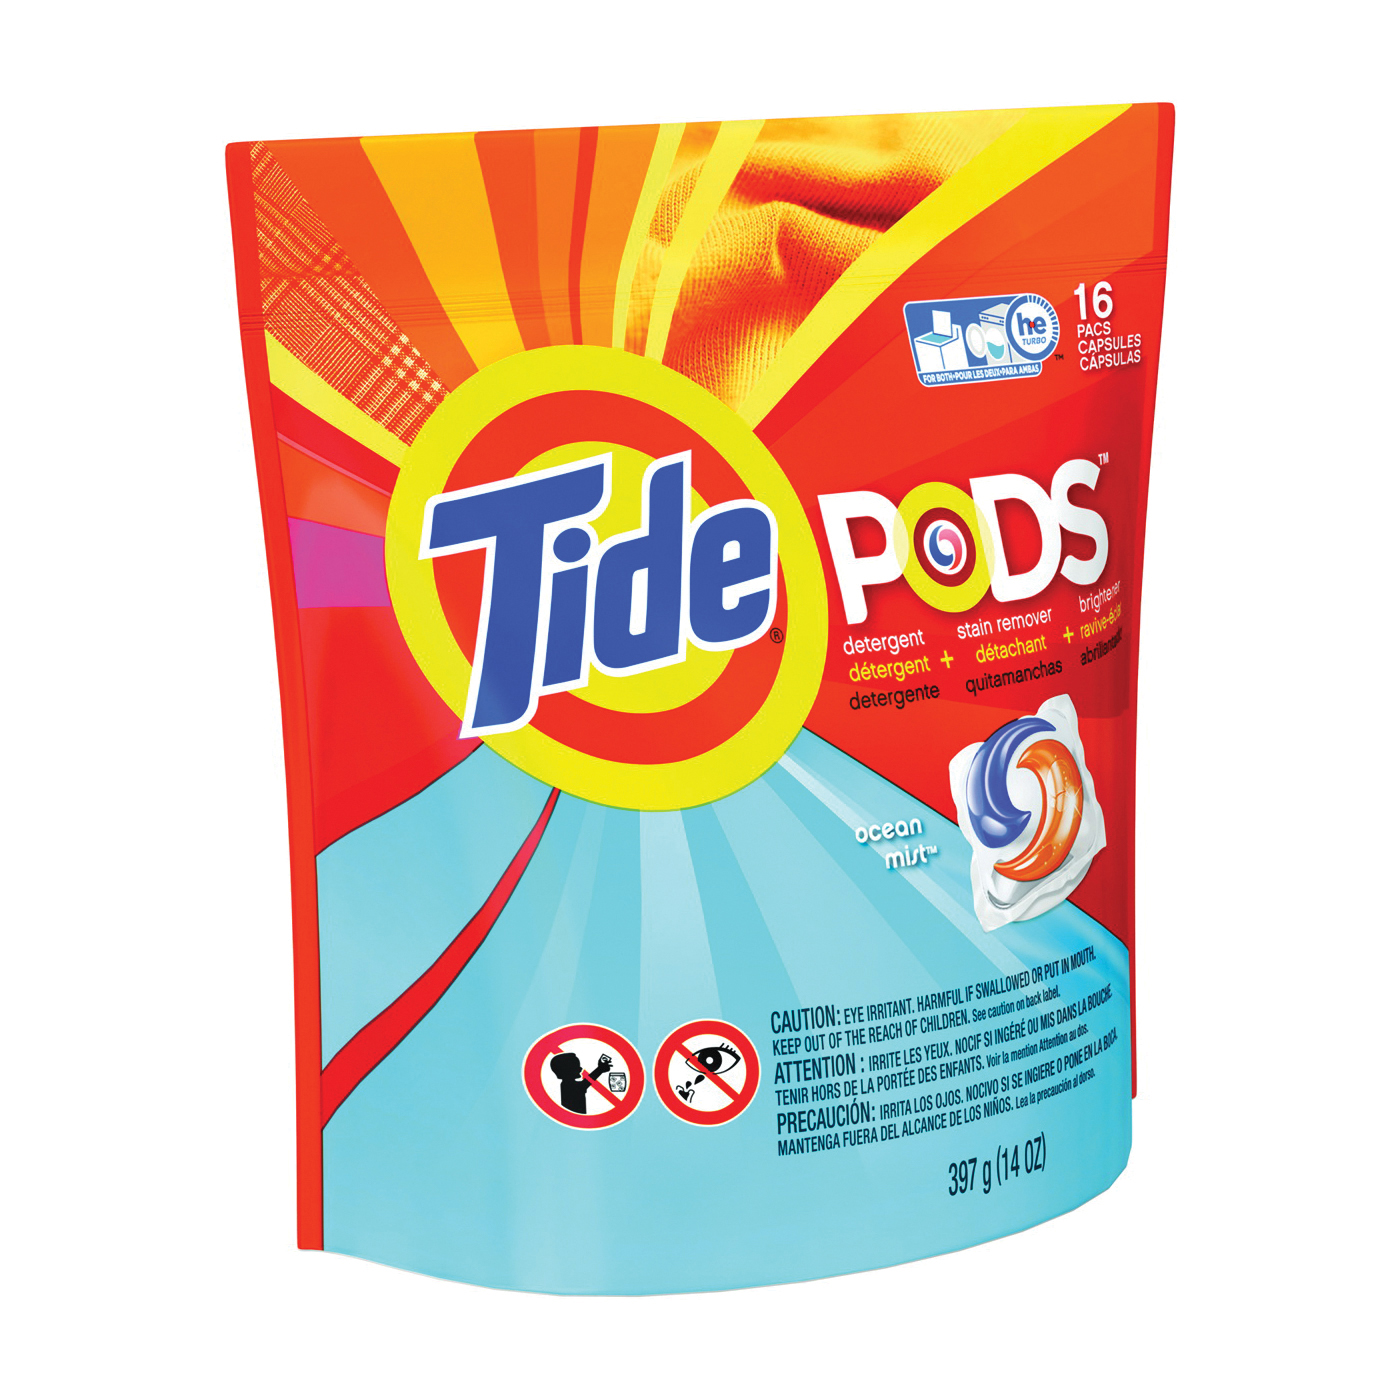 Tide 93119 Laundry Detergent, 16 CT, Powder, Ocean Mist - 1